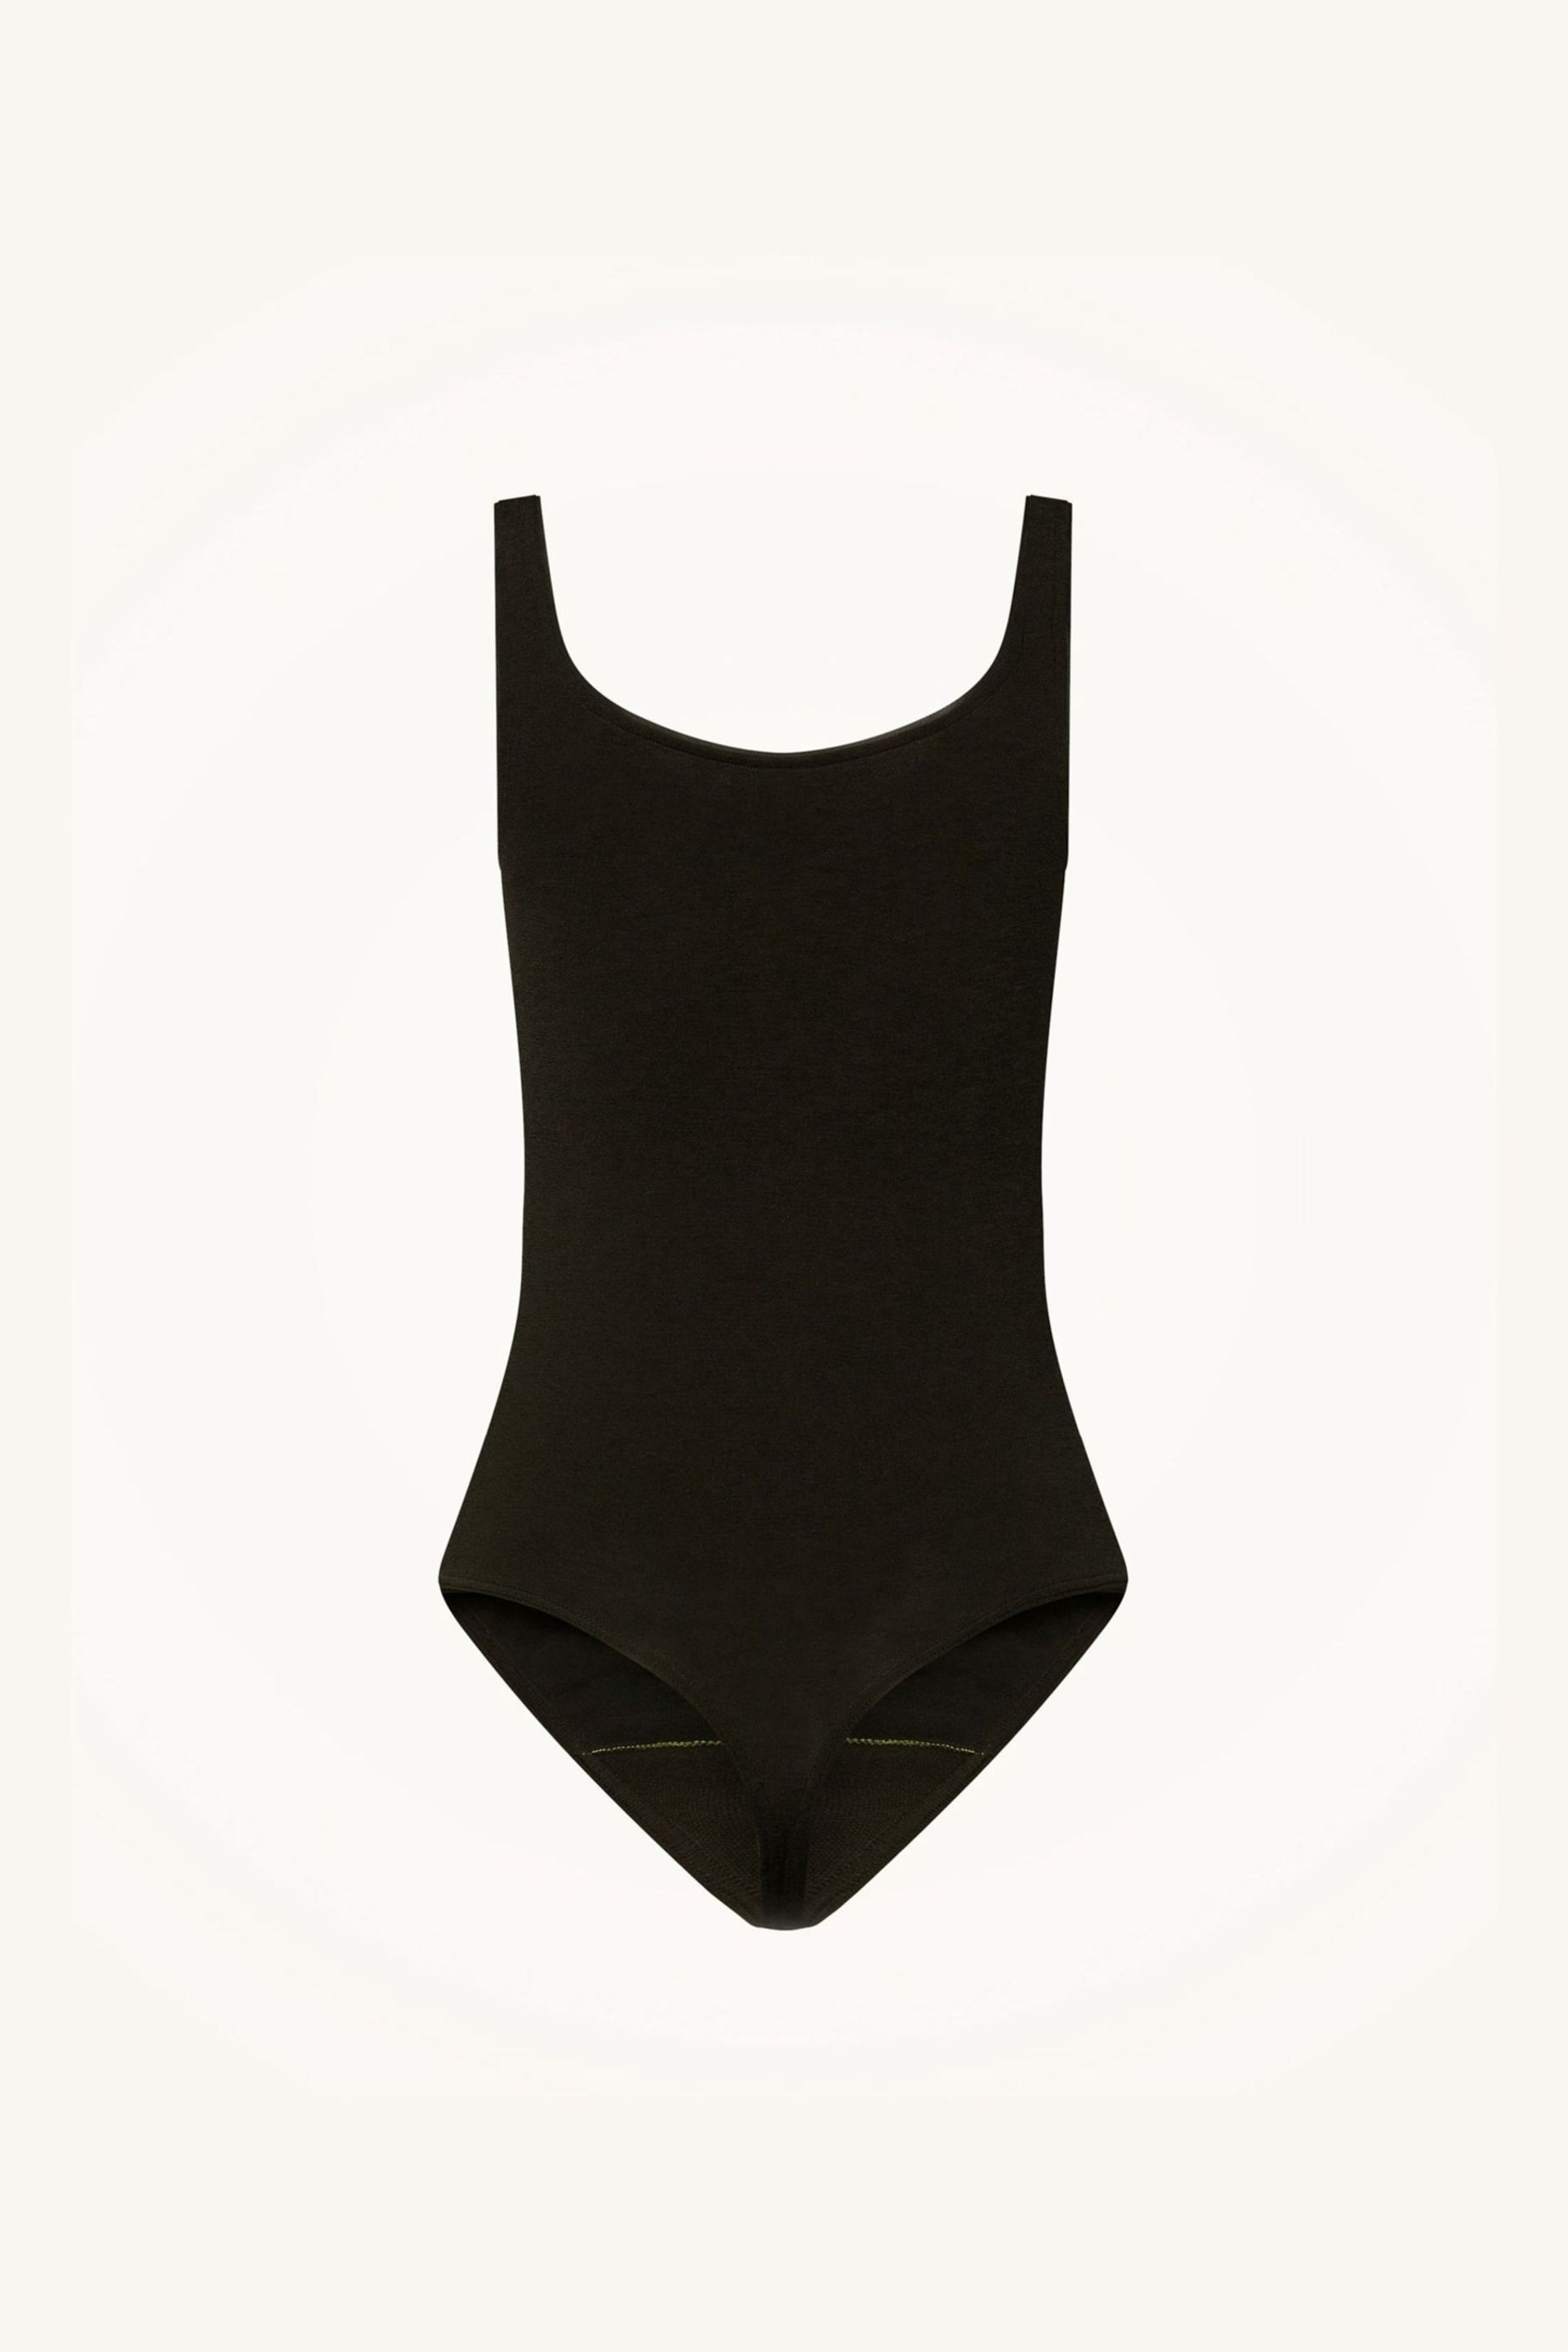 Wolford Black Jamaika Vest String Bodysuit - Image 5 of 5